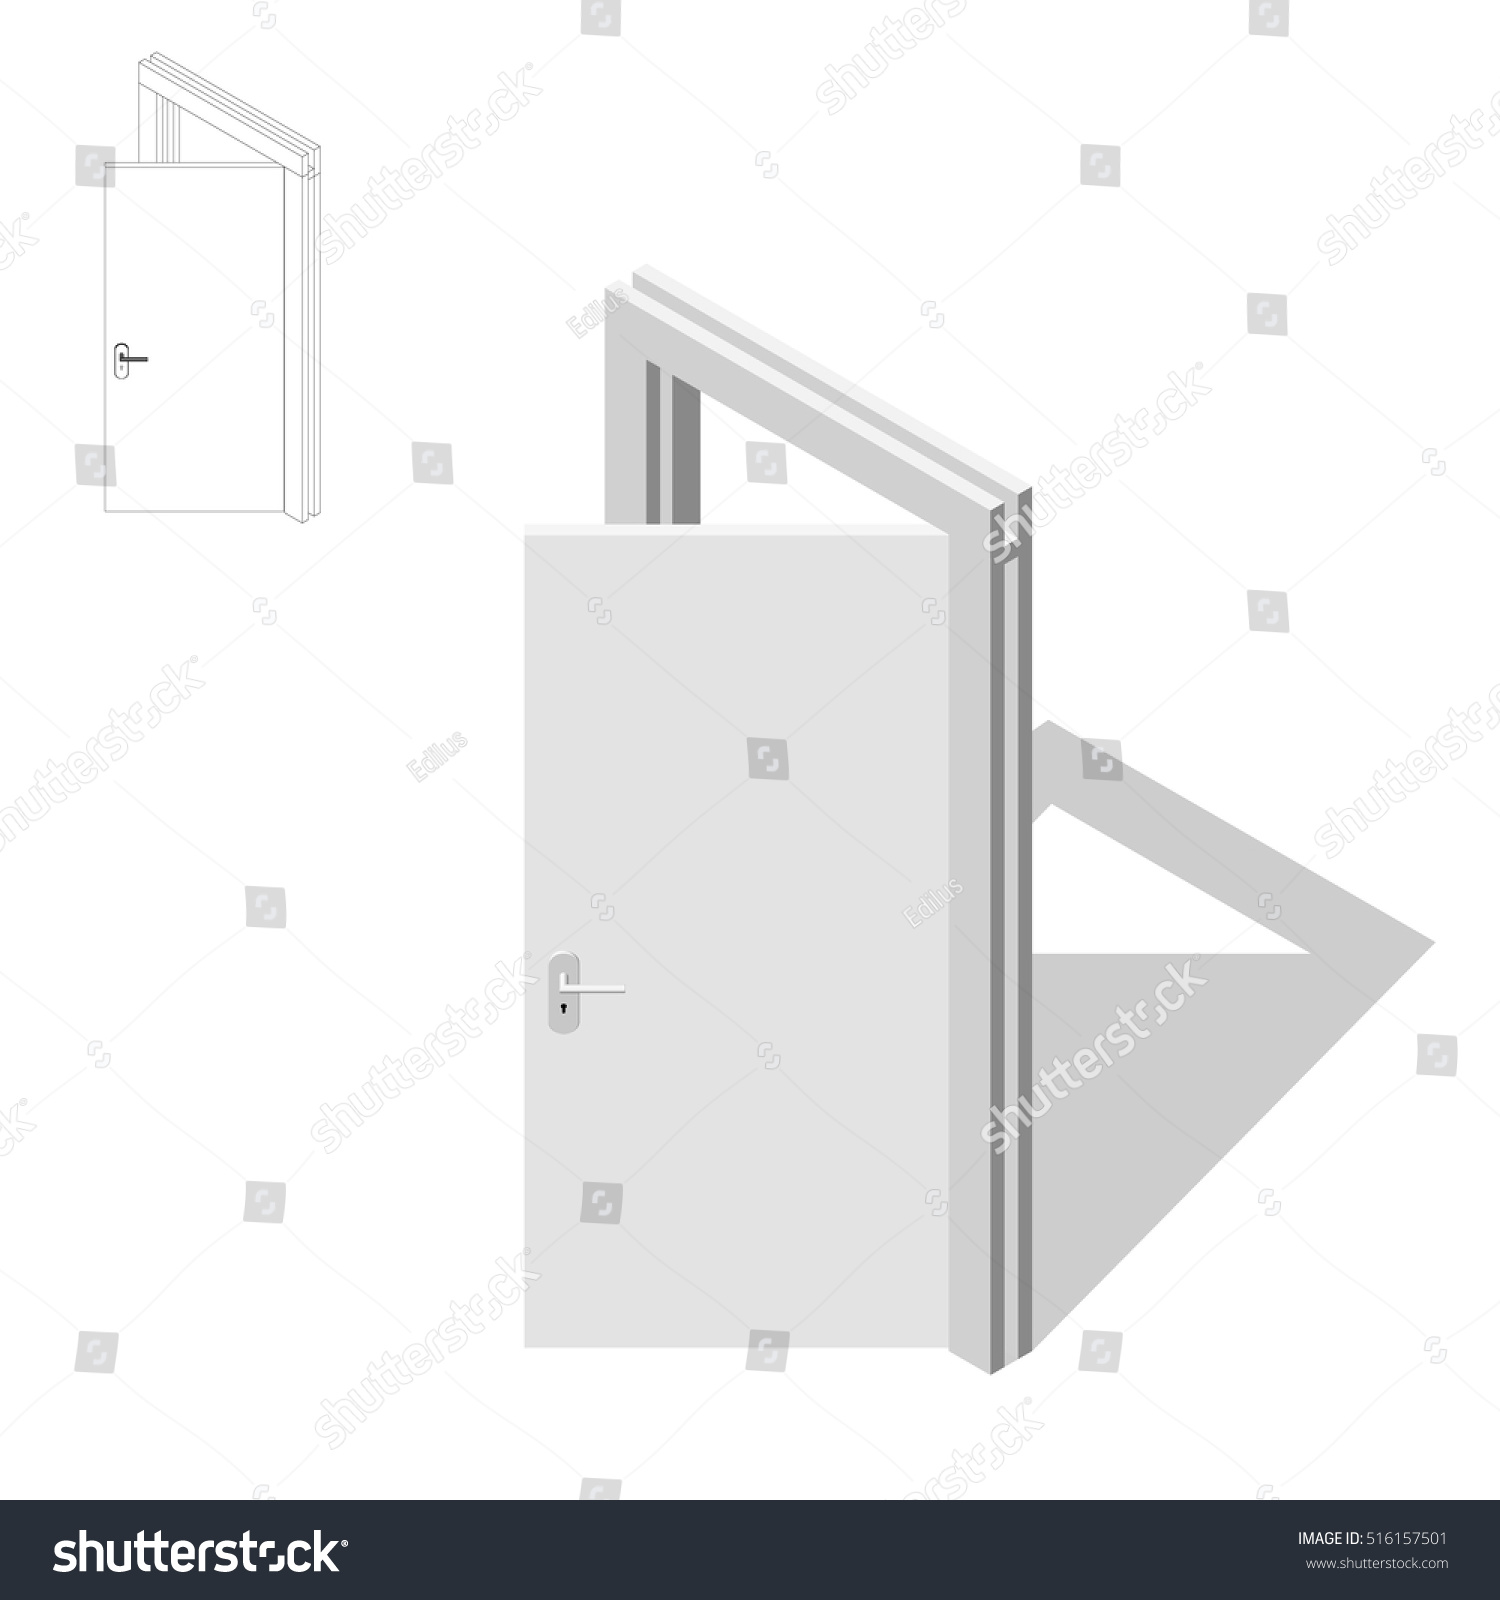 Open Door Isolated On White Background Stock Vector 516157501